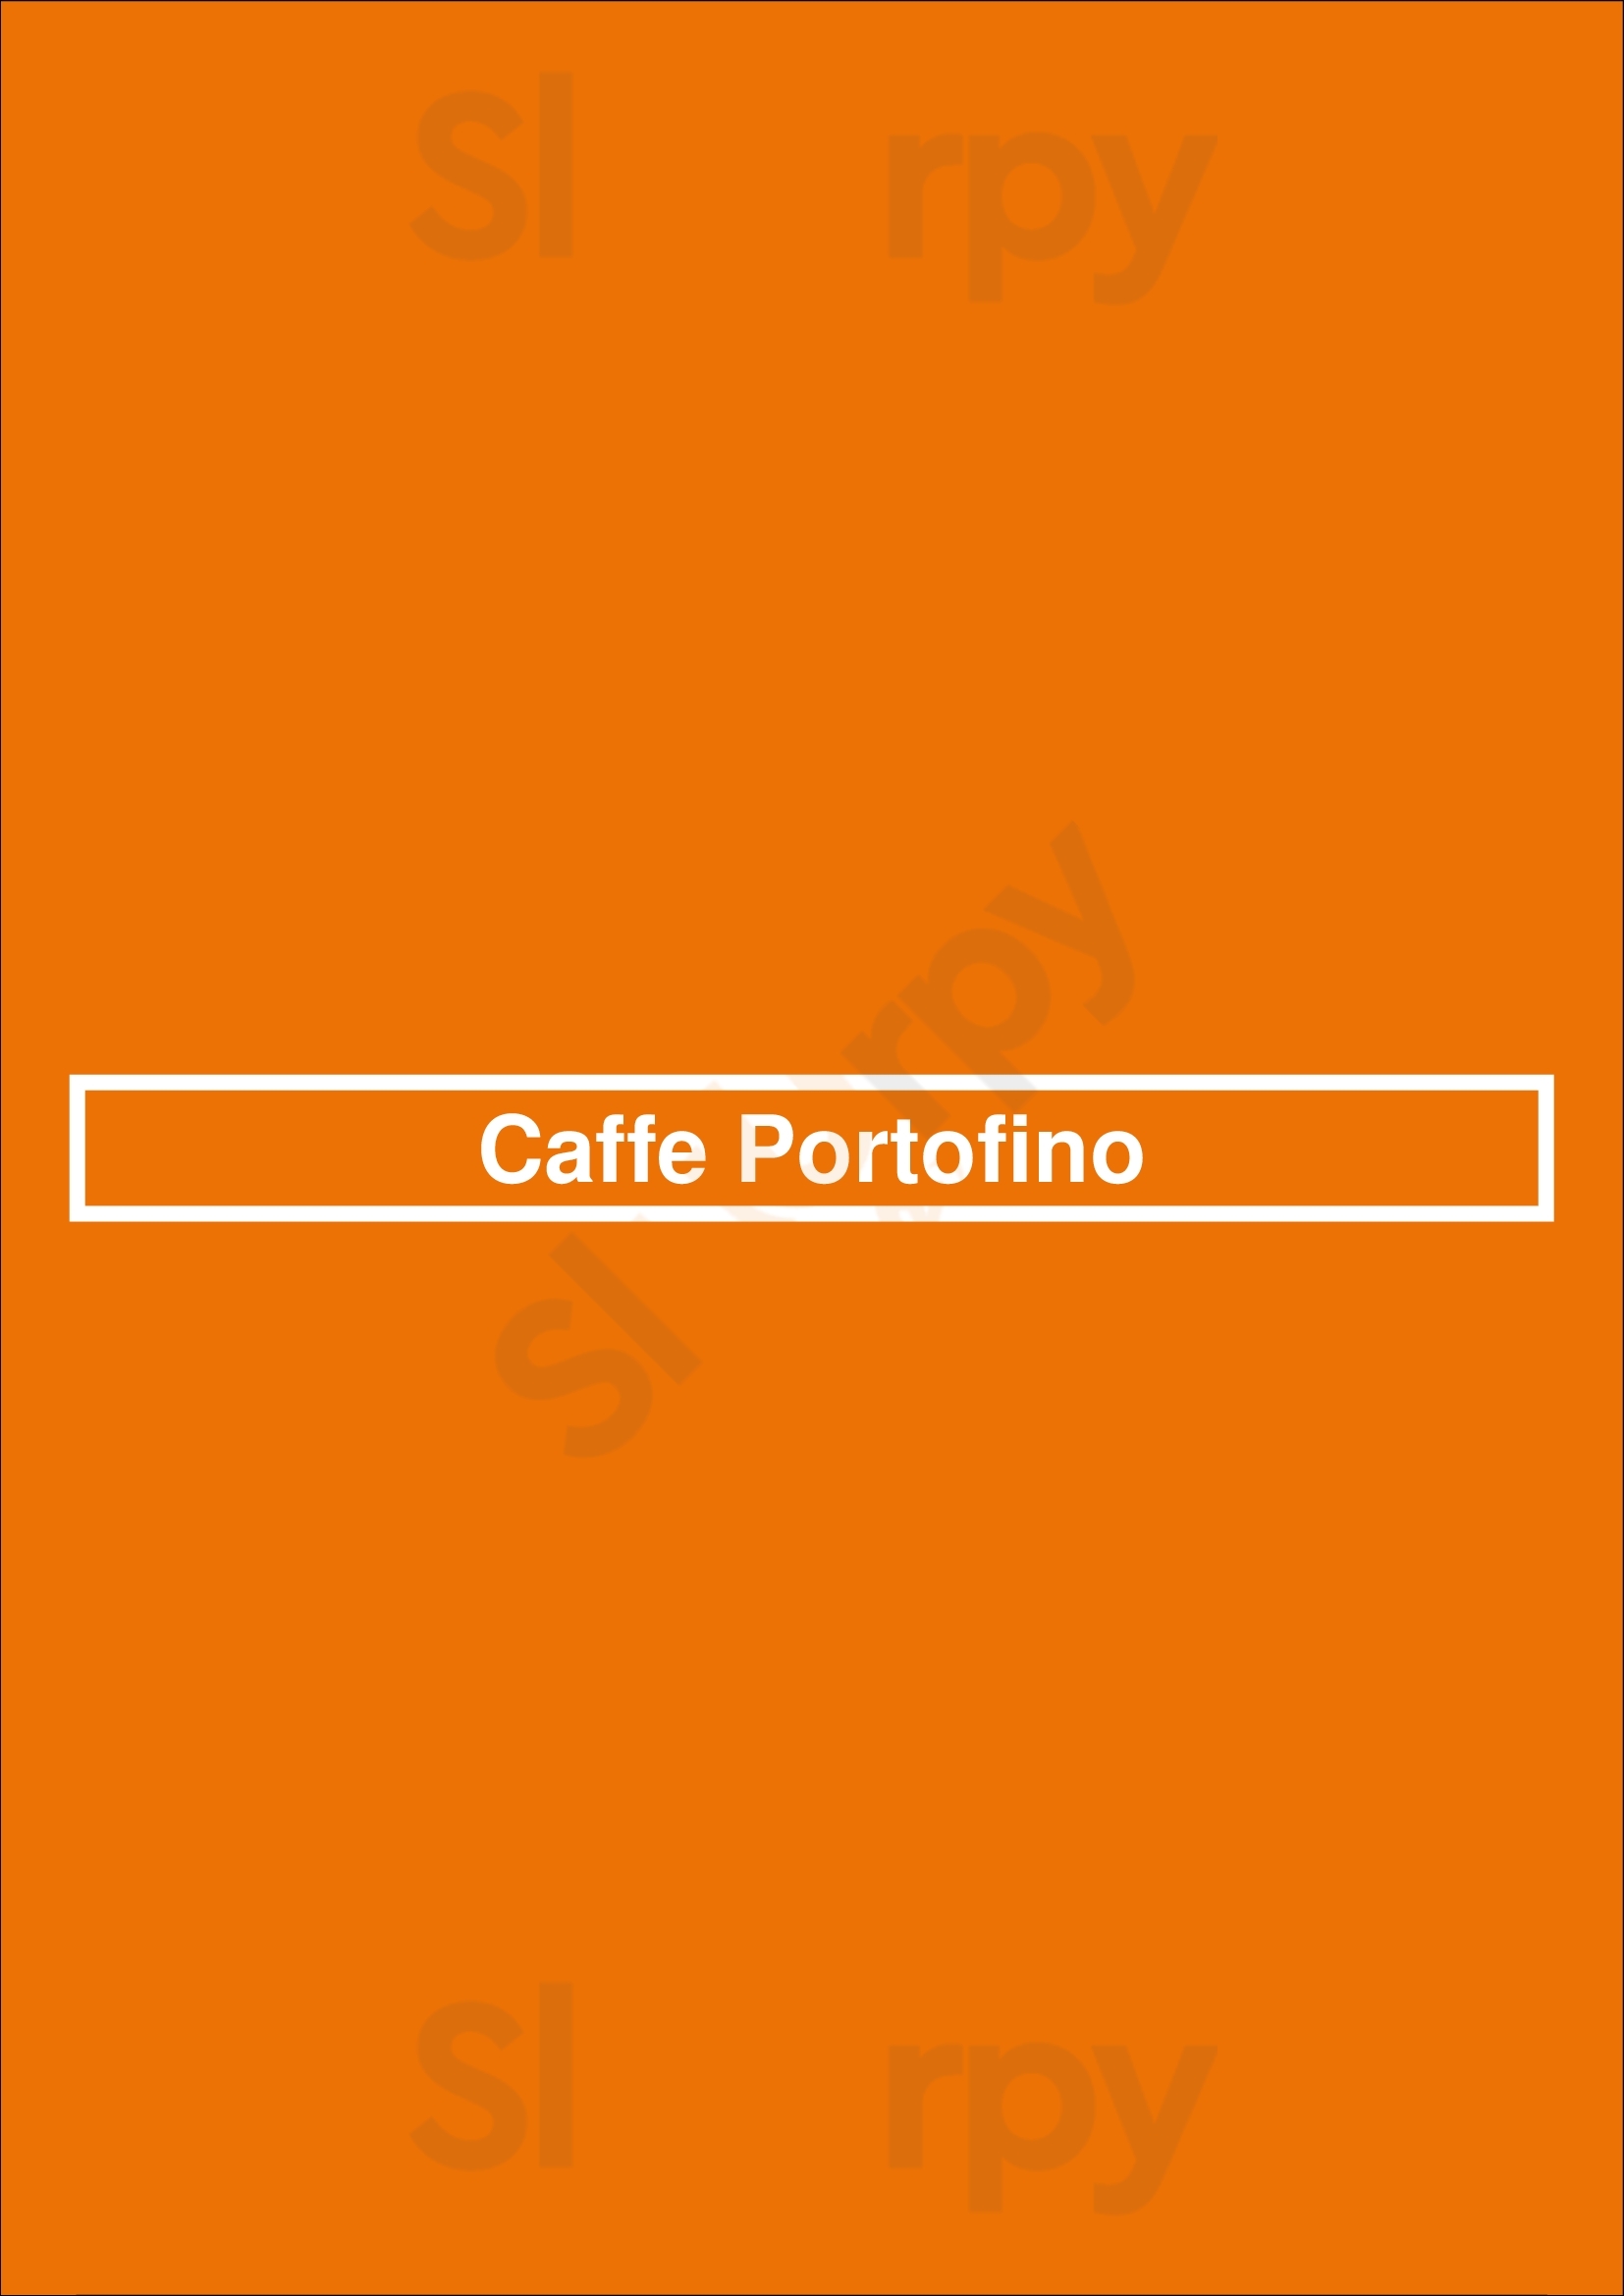 Caffe Portofino Northport Menu - 1